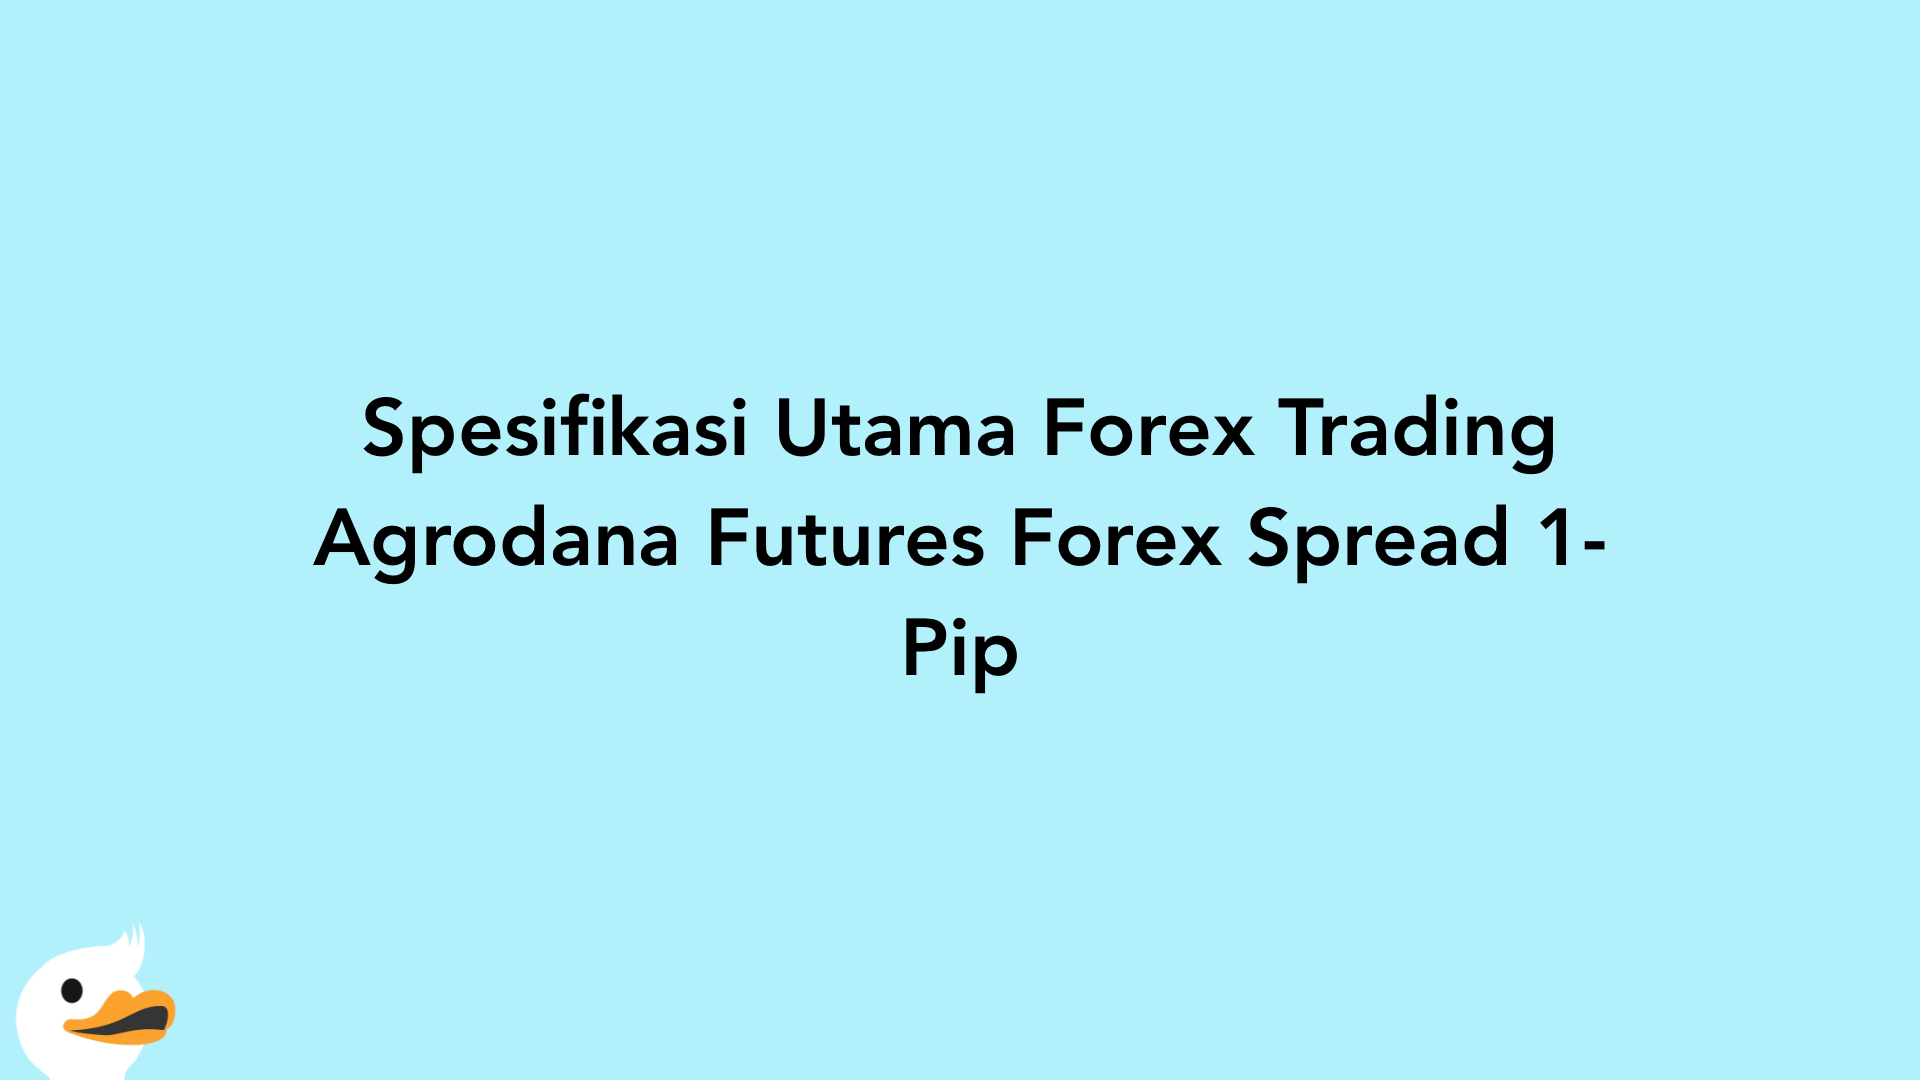 Spesifikasi Utama Forex Trading Agrodana Futures Forex Spread 1-Pip